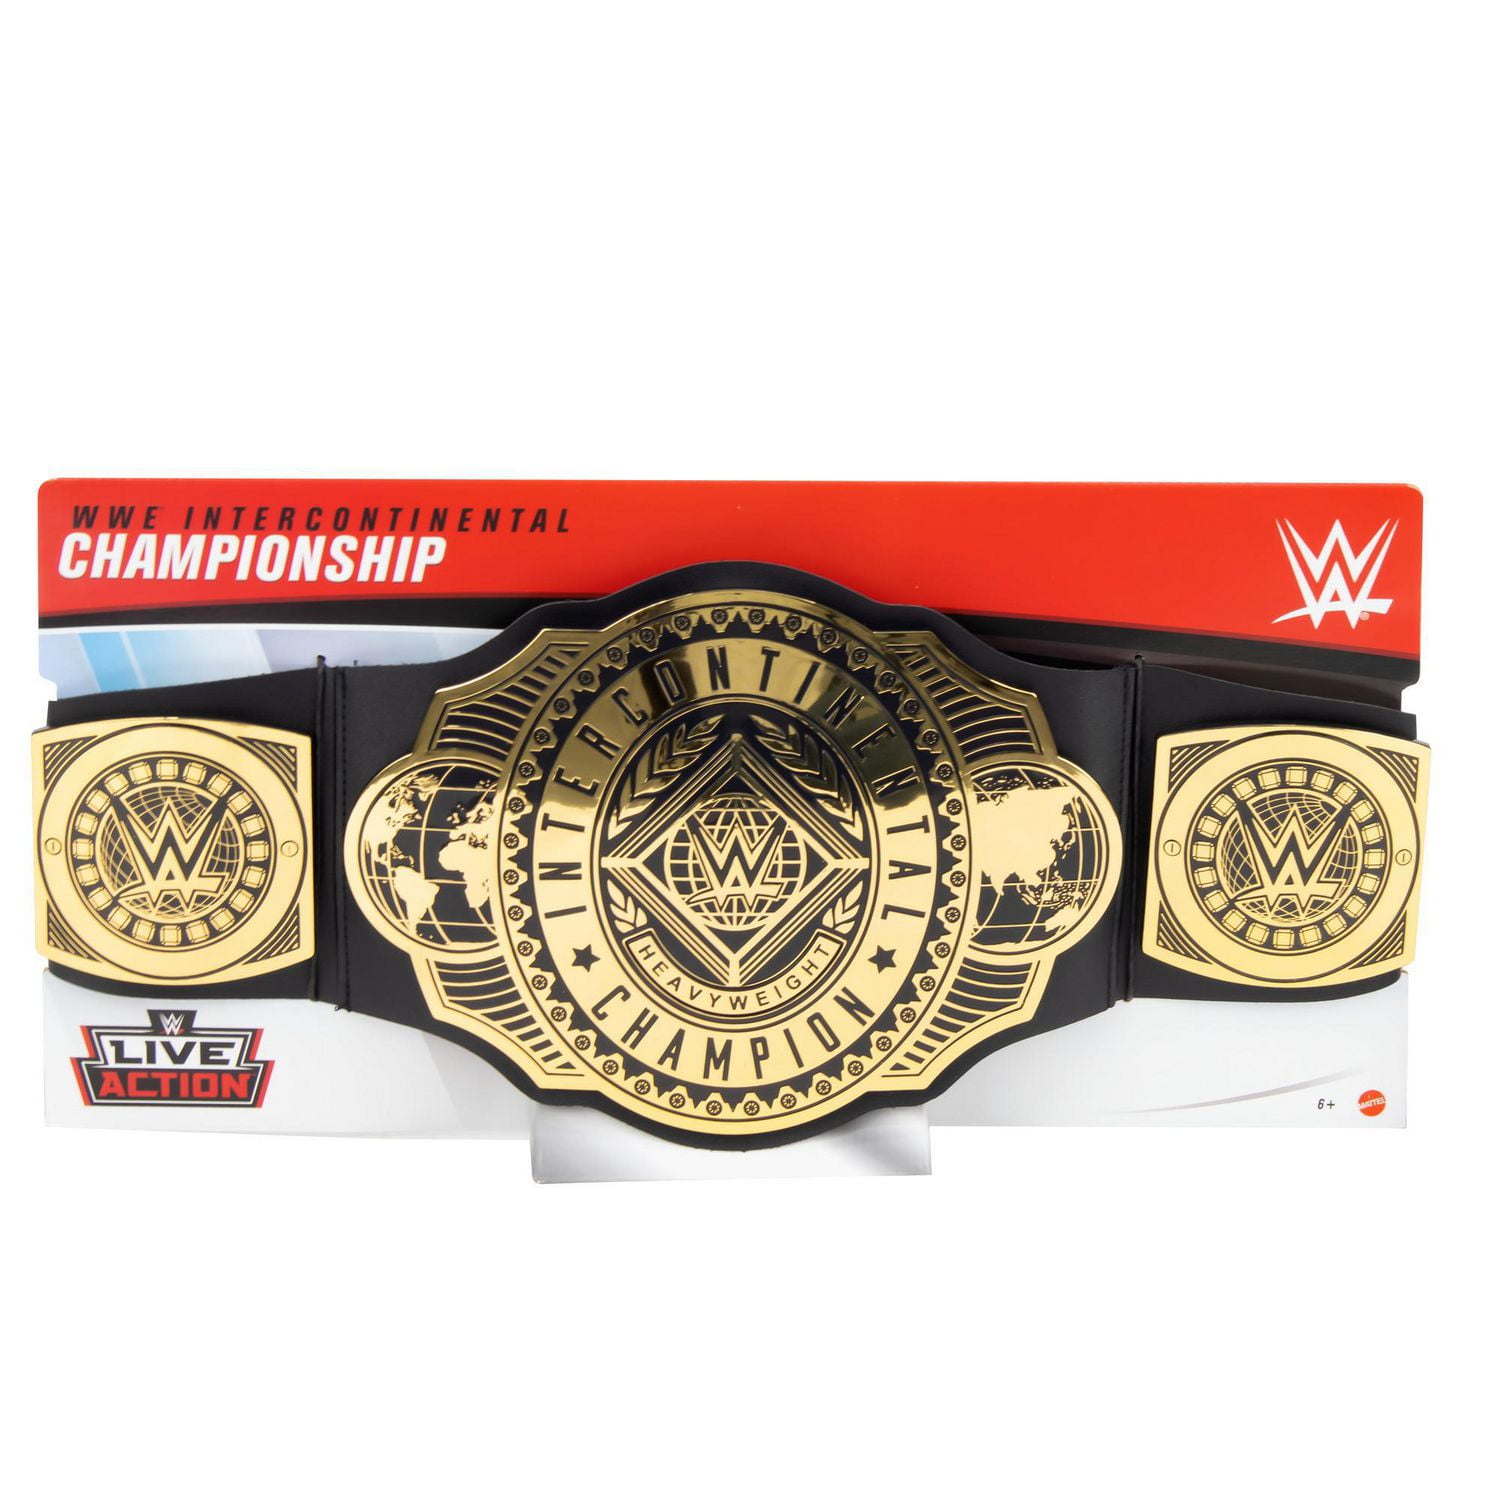 Wwe intercontinental wrestling championship belt 2mm-03